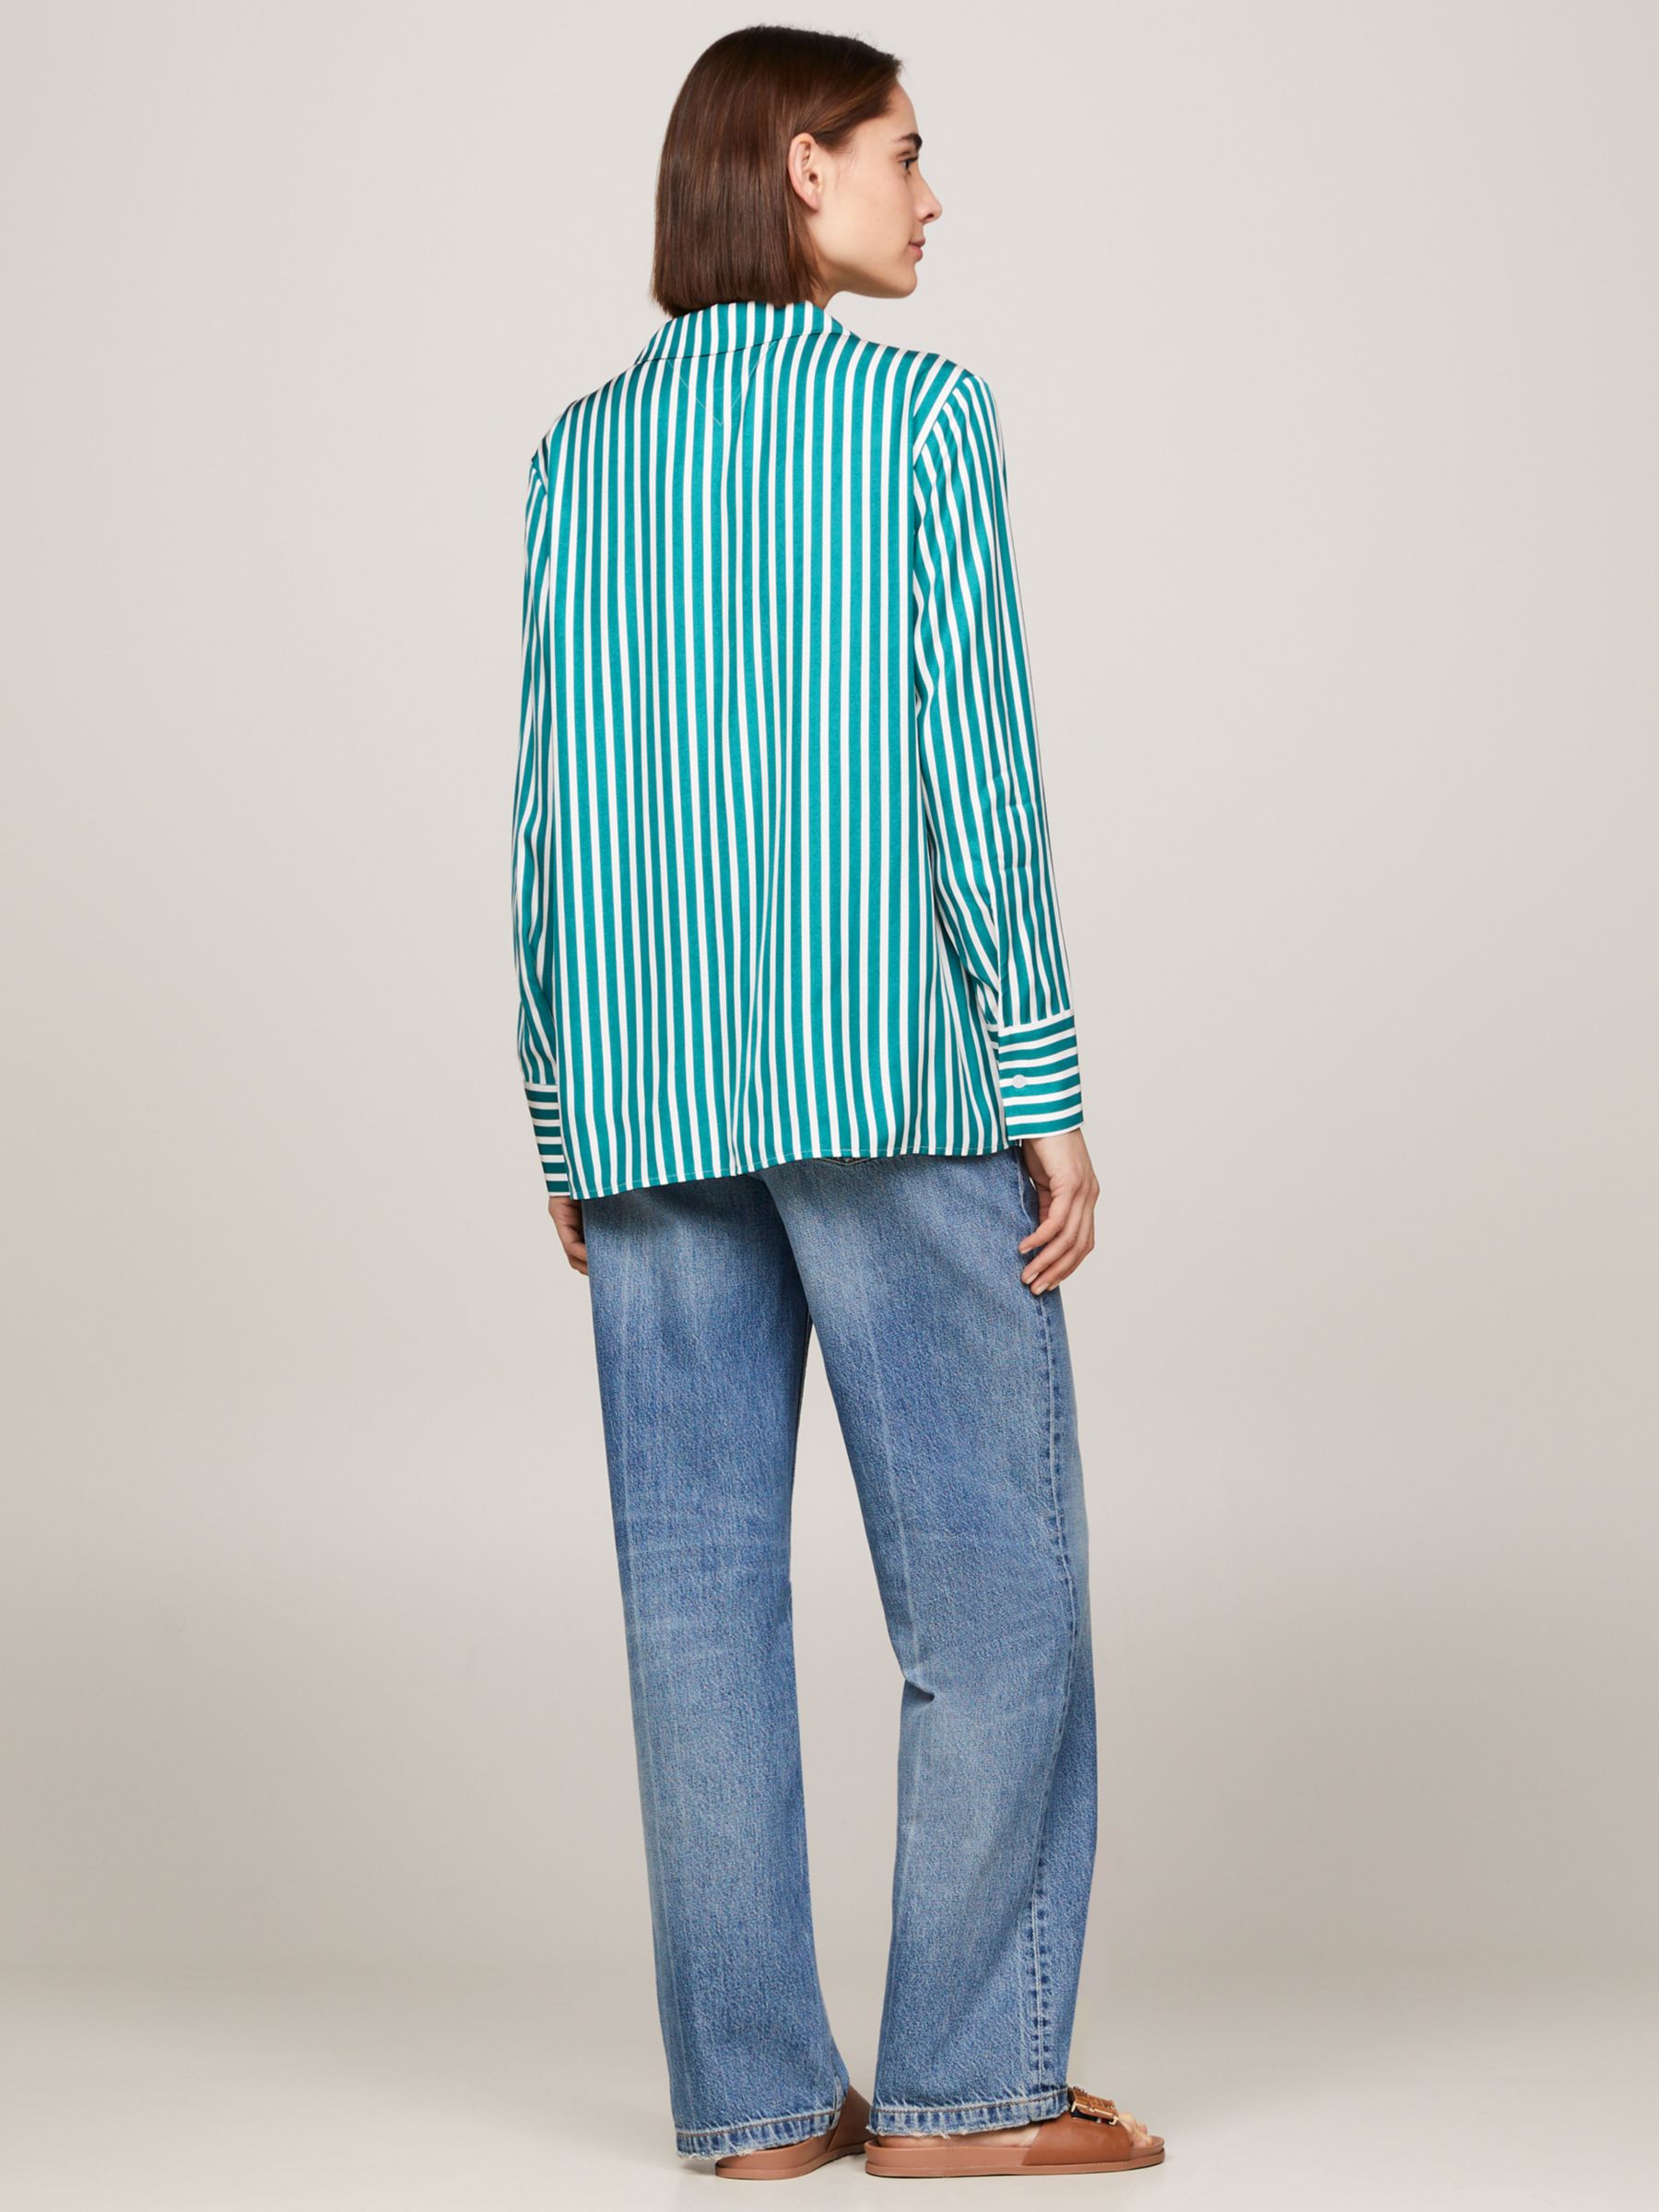 Tommy Hilfiger Striped Satin Shirt, Green/White, 4